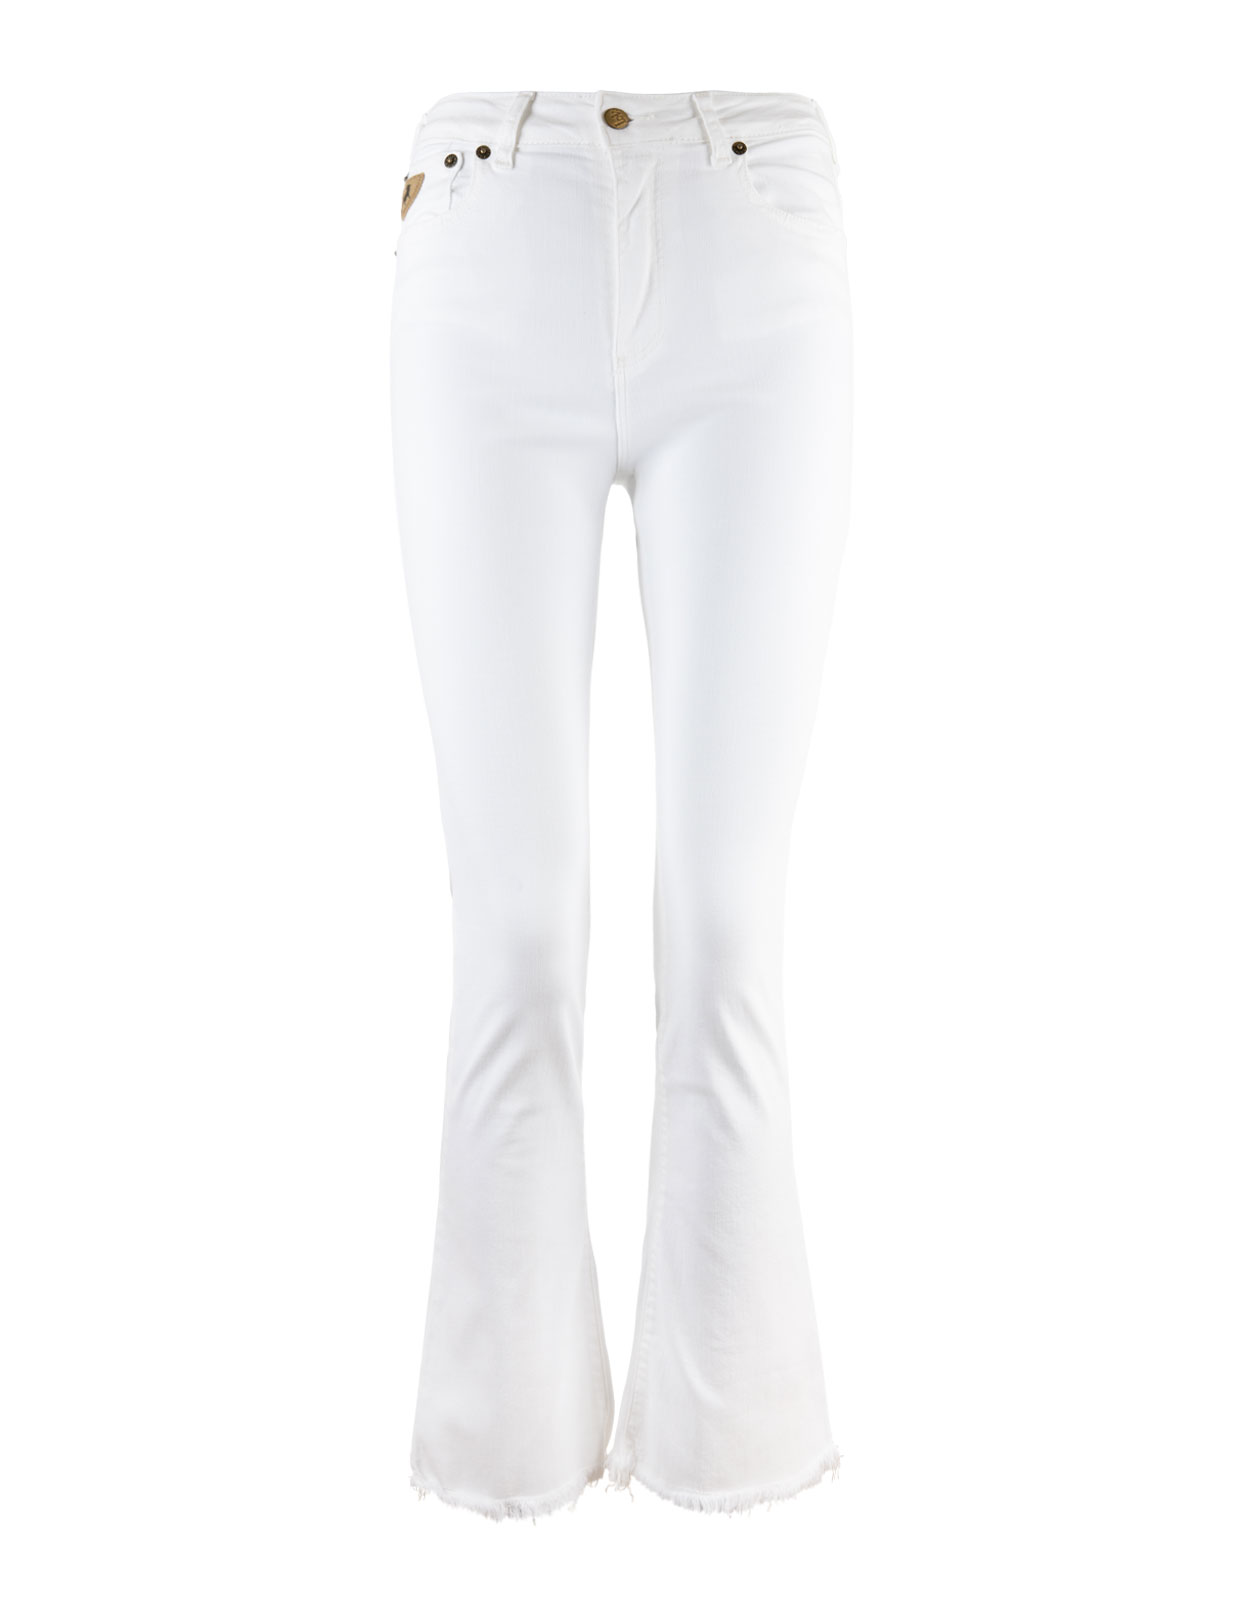 Marbella Edge Jeans White